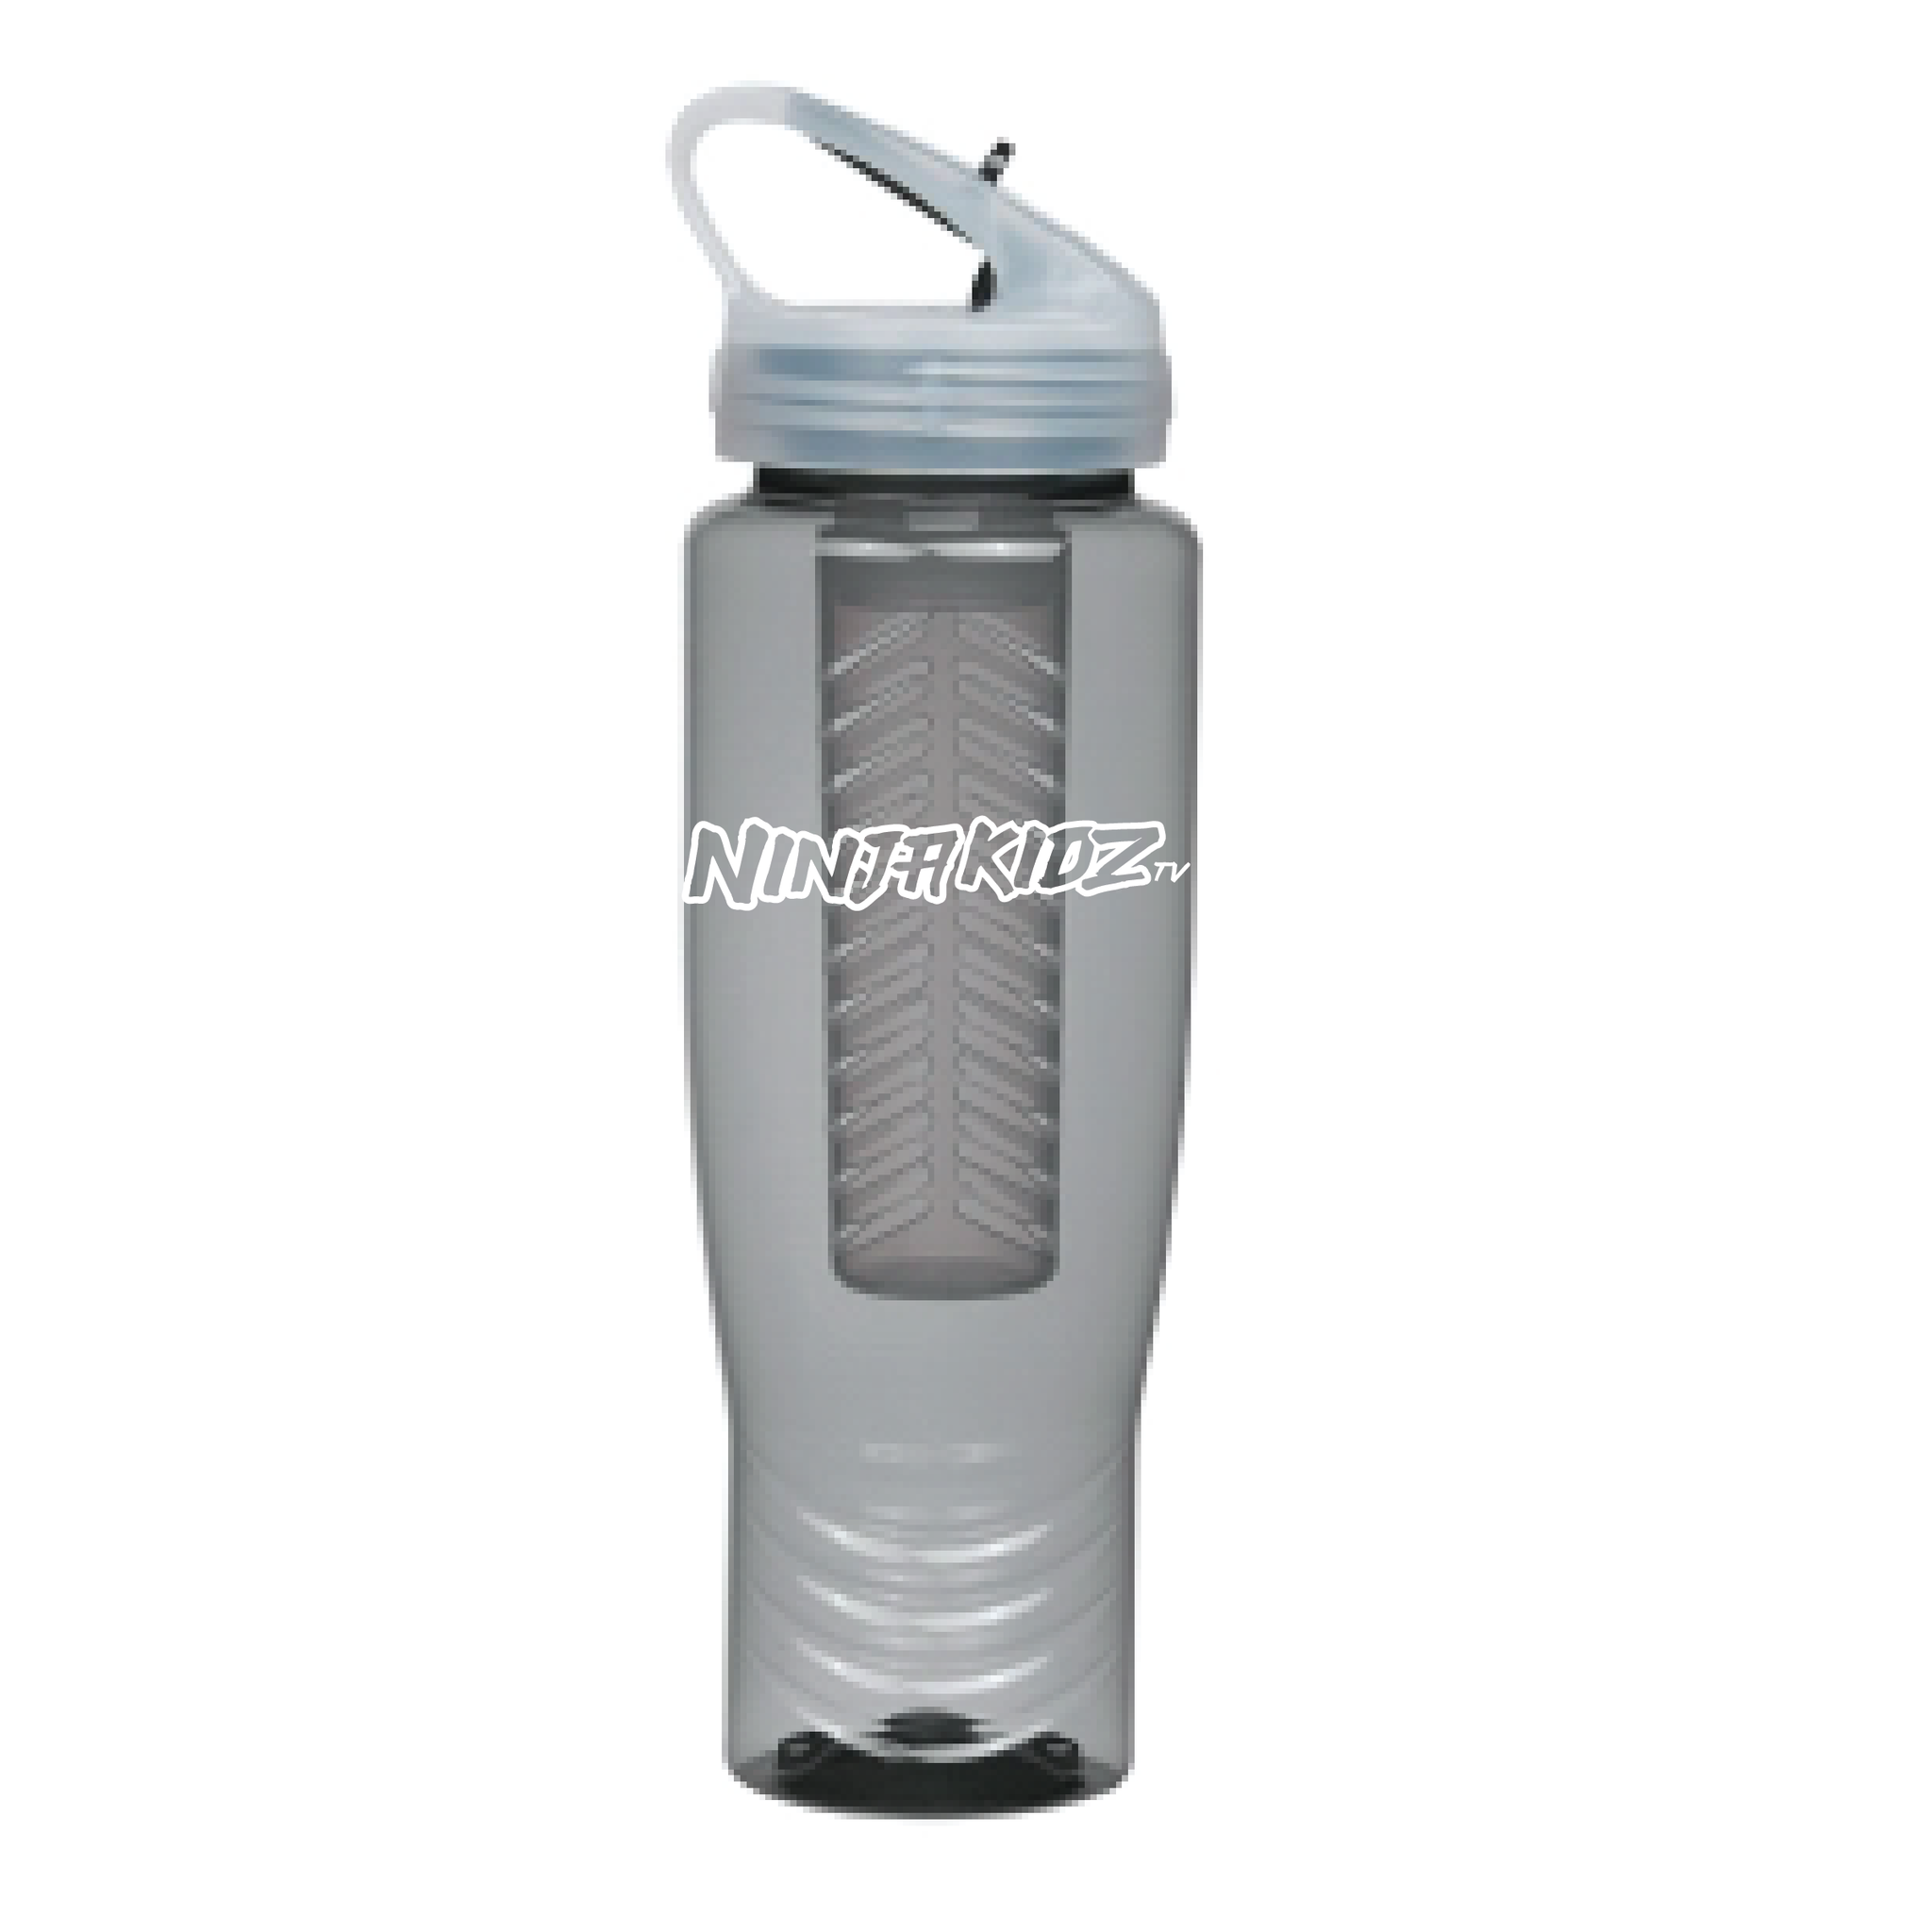 The Ninja Jug - Alkaline Water Jug - Limited Offer - Only $49.99